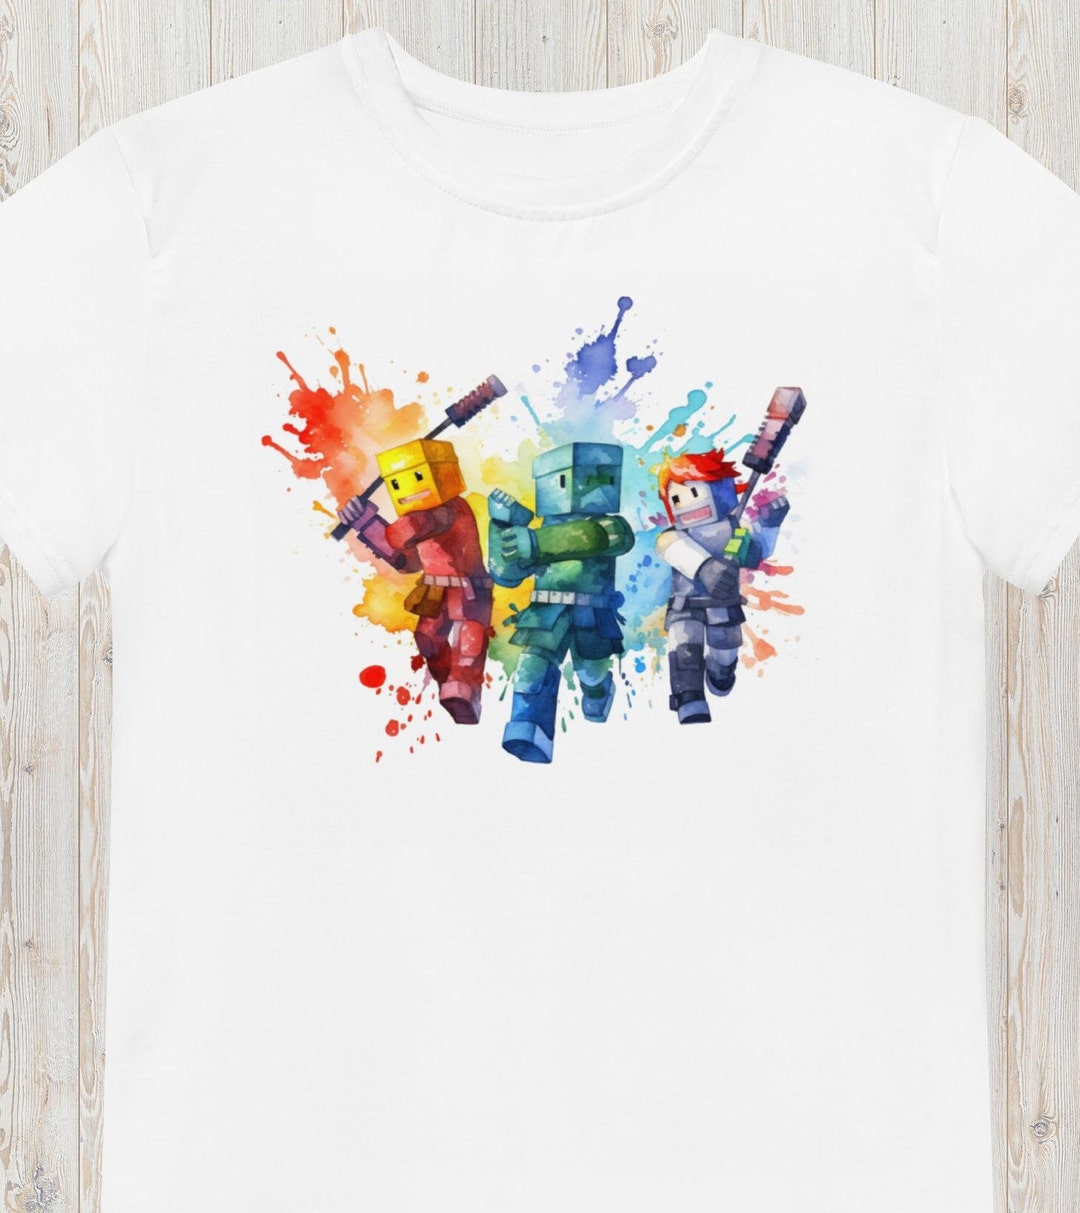 T-shirt design for a roblox content creator 100% creativity, T-shirt  contest